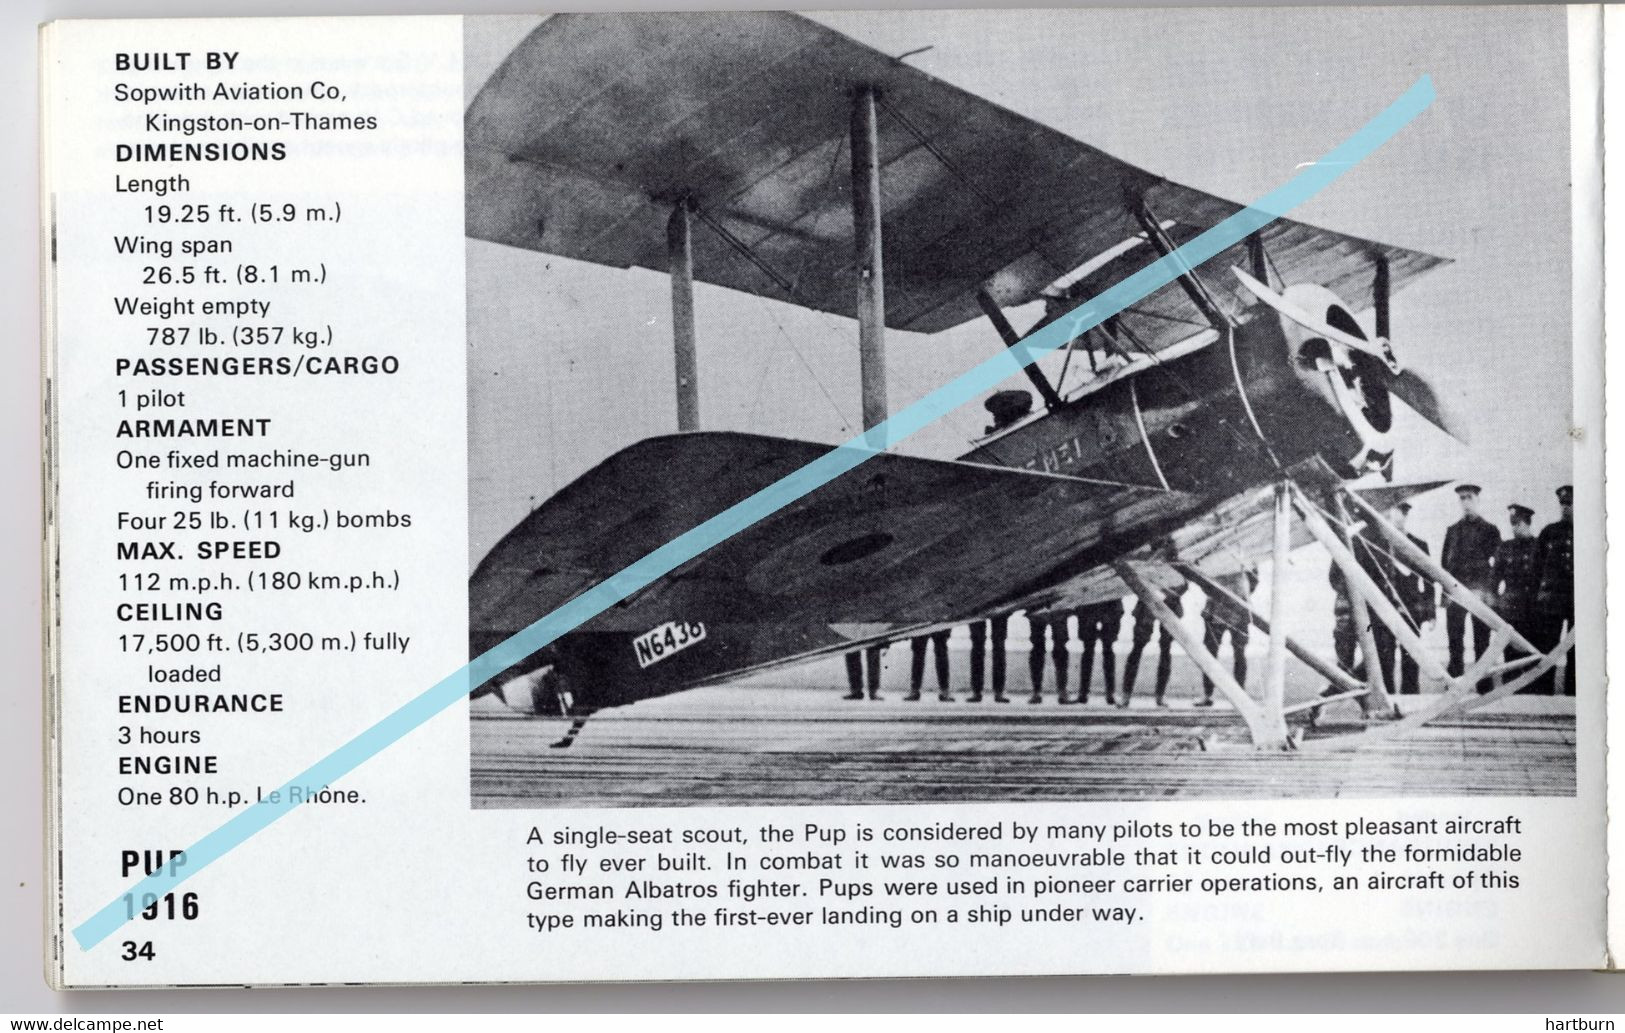 ♥️ Aircaft, A Picture History By M. Allward (Piccolo) (18 X 11 Cm) 160 Pages (BAK-5,2) Avion, Vliegtuig - Transportation